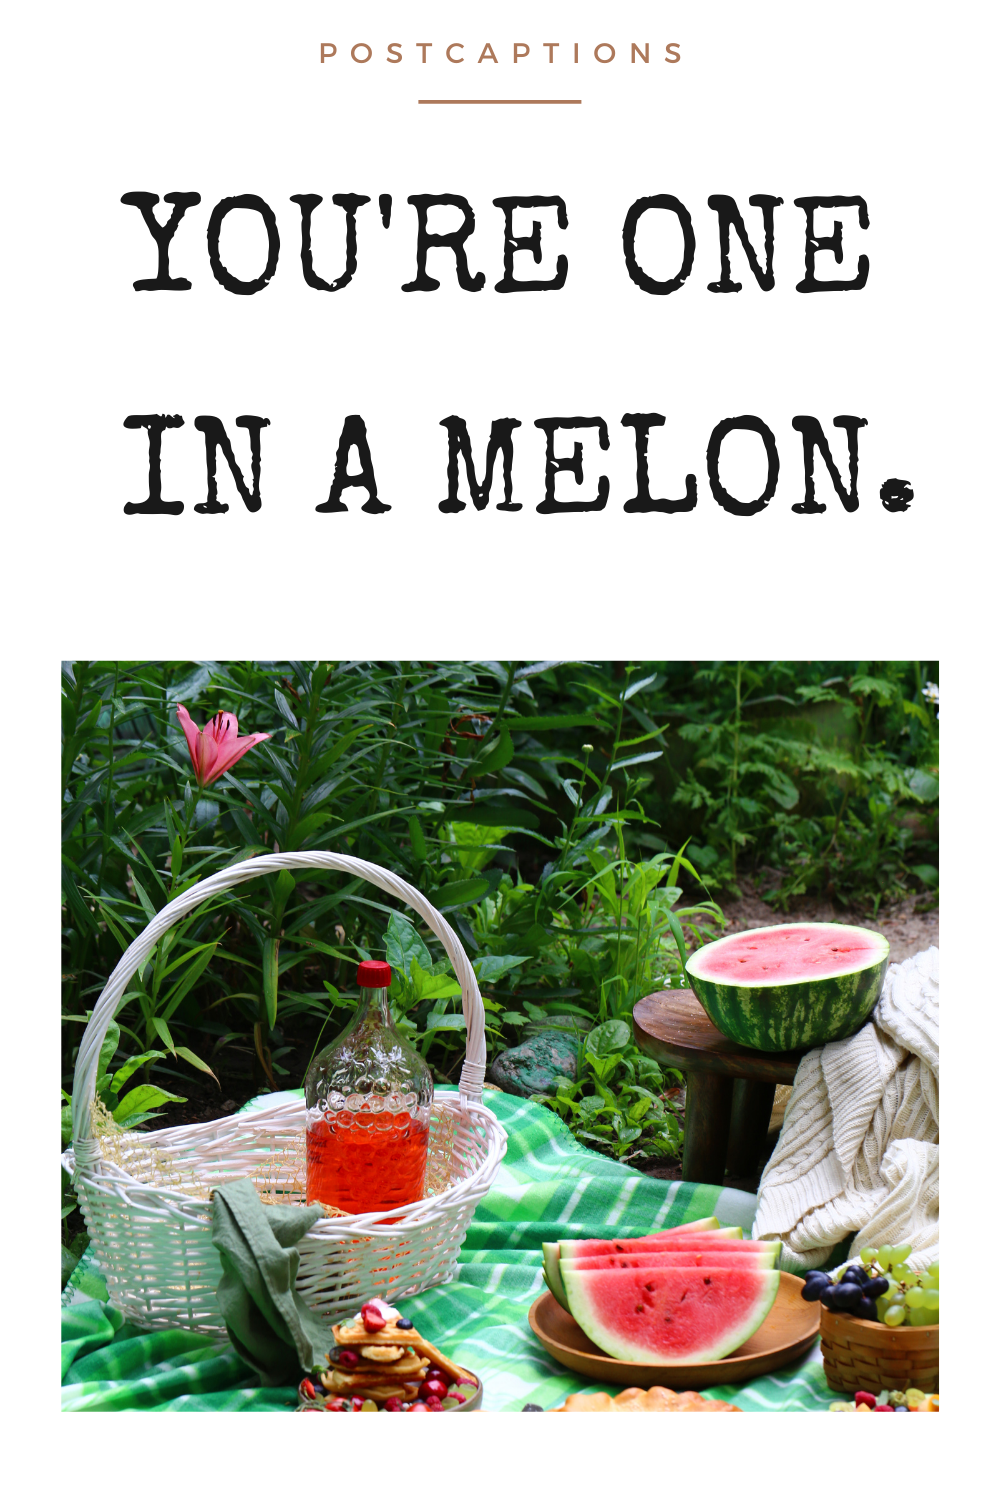 Watermelon puns